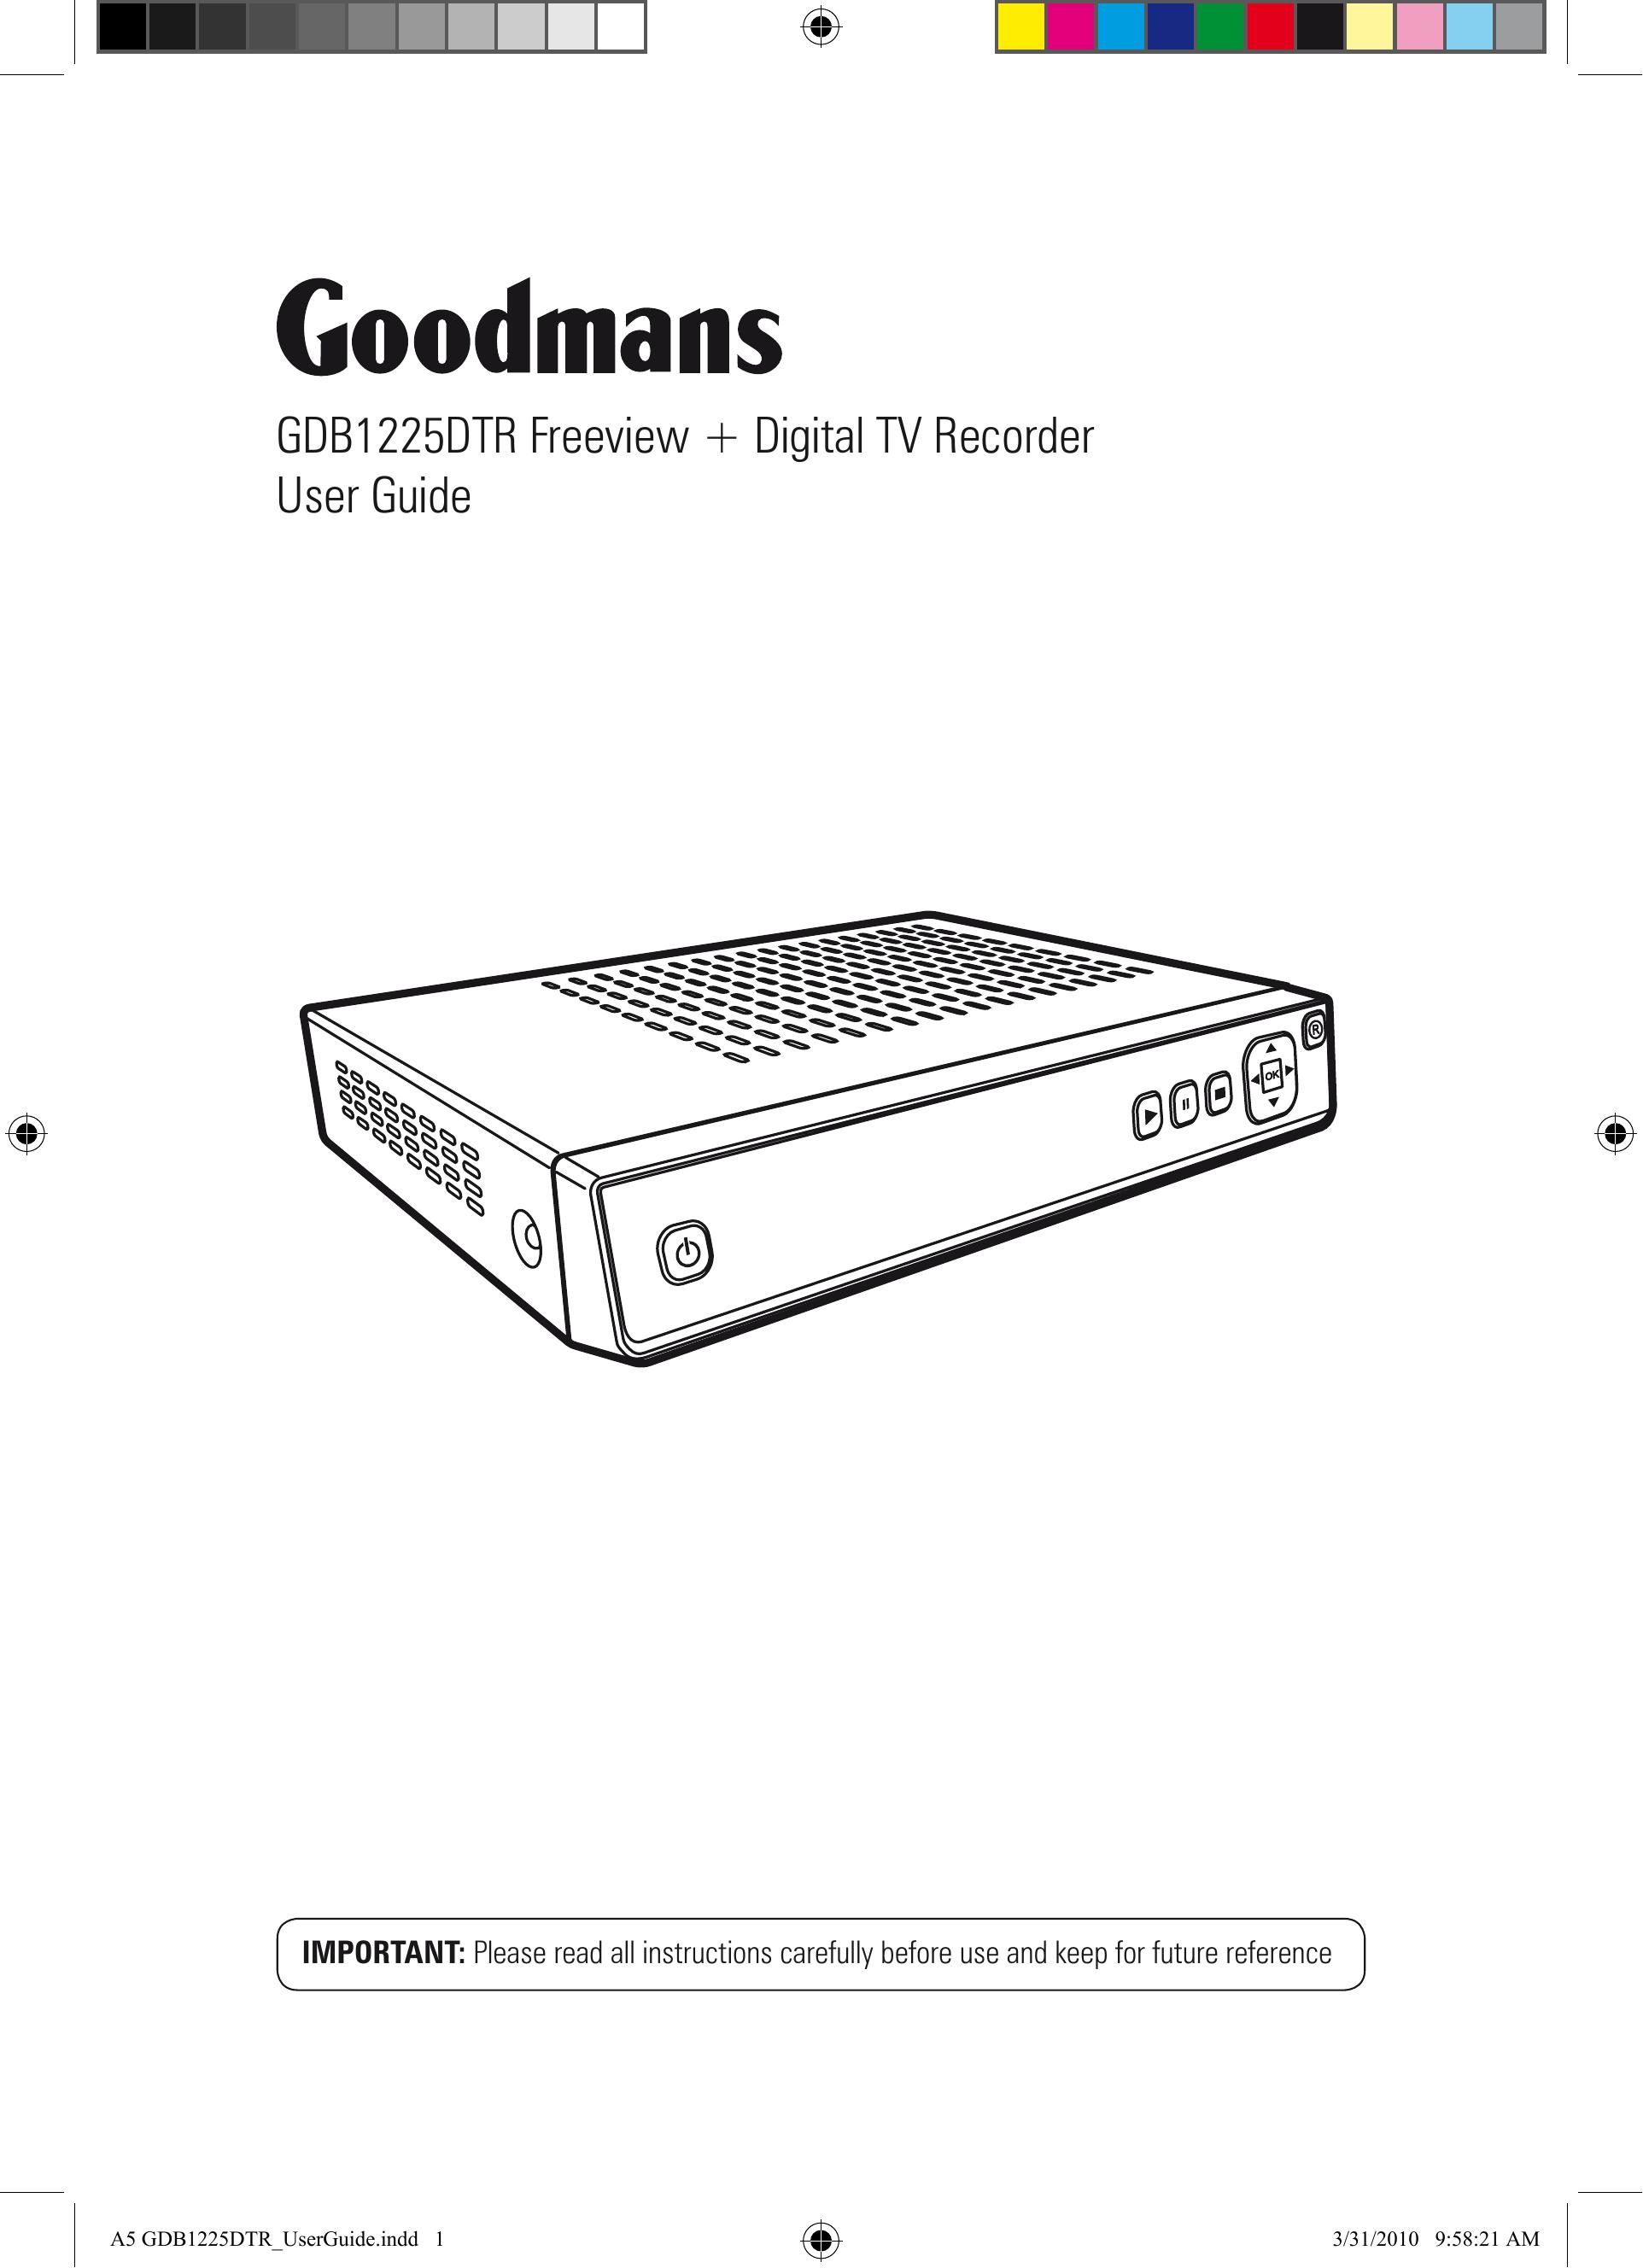 Goodmans GDB1225DTR Clothes Dryer User Manual